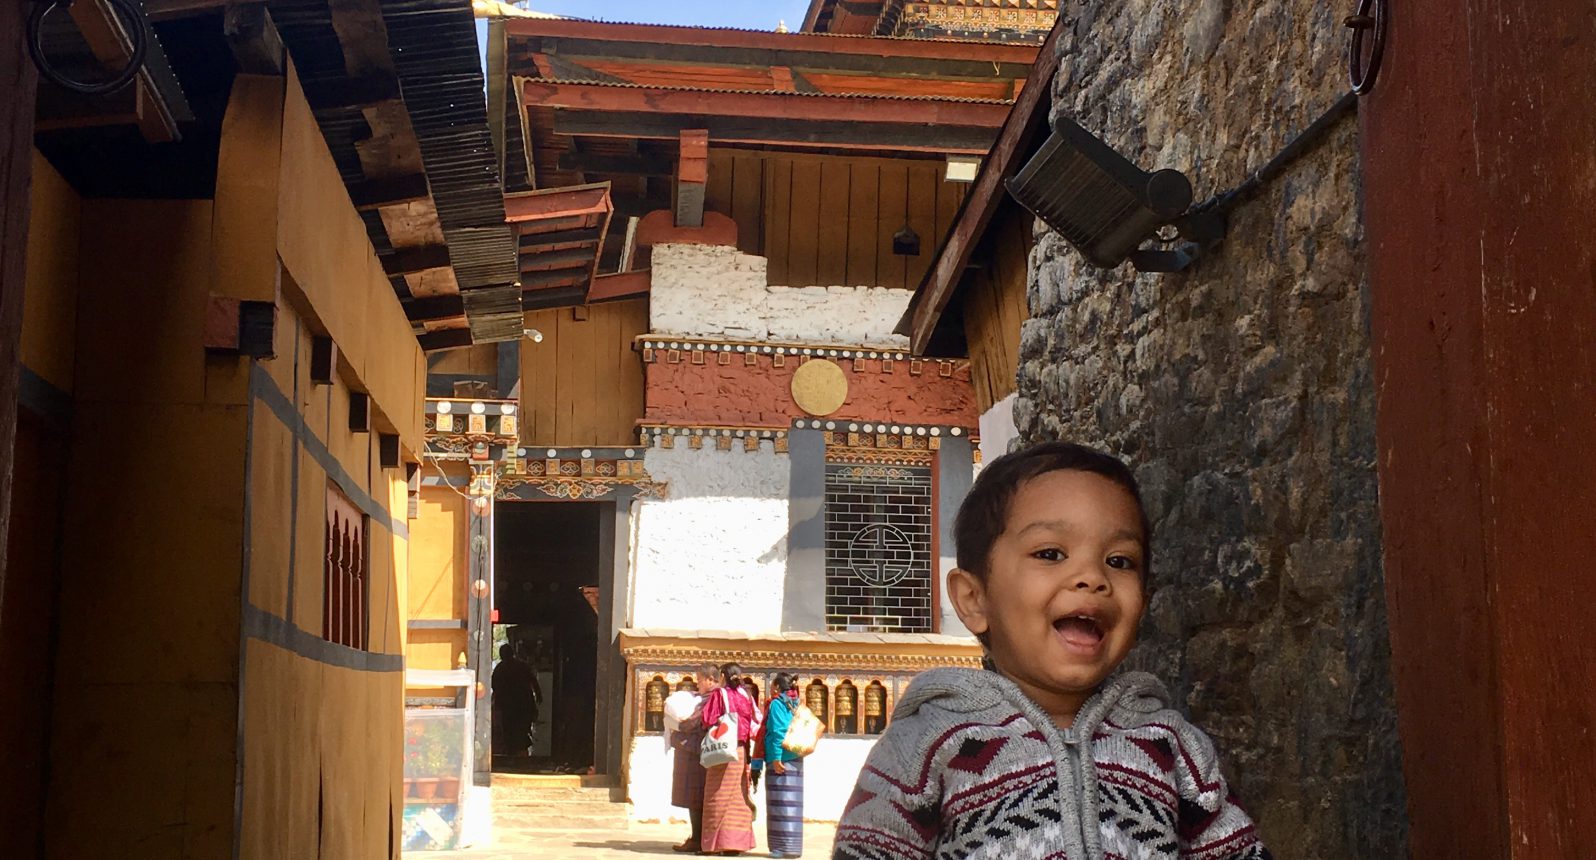 The 2 year old sitting on the steps of a 12th century monastery, Changangkha Lakhang, Thimphu, Bhutan. Samai Haider